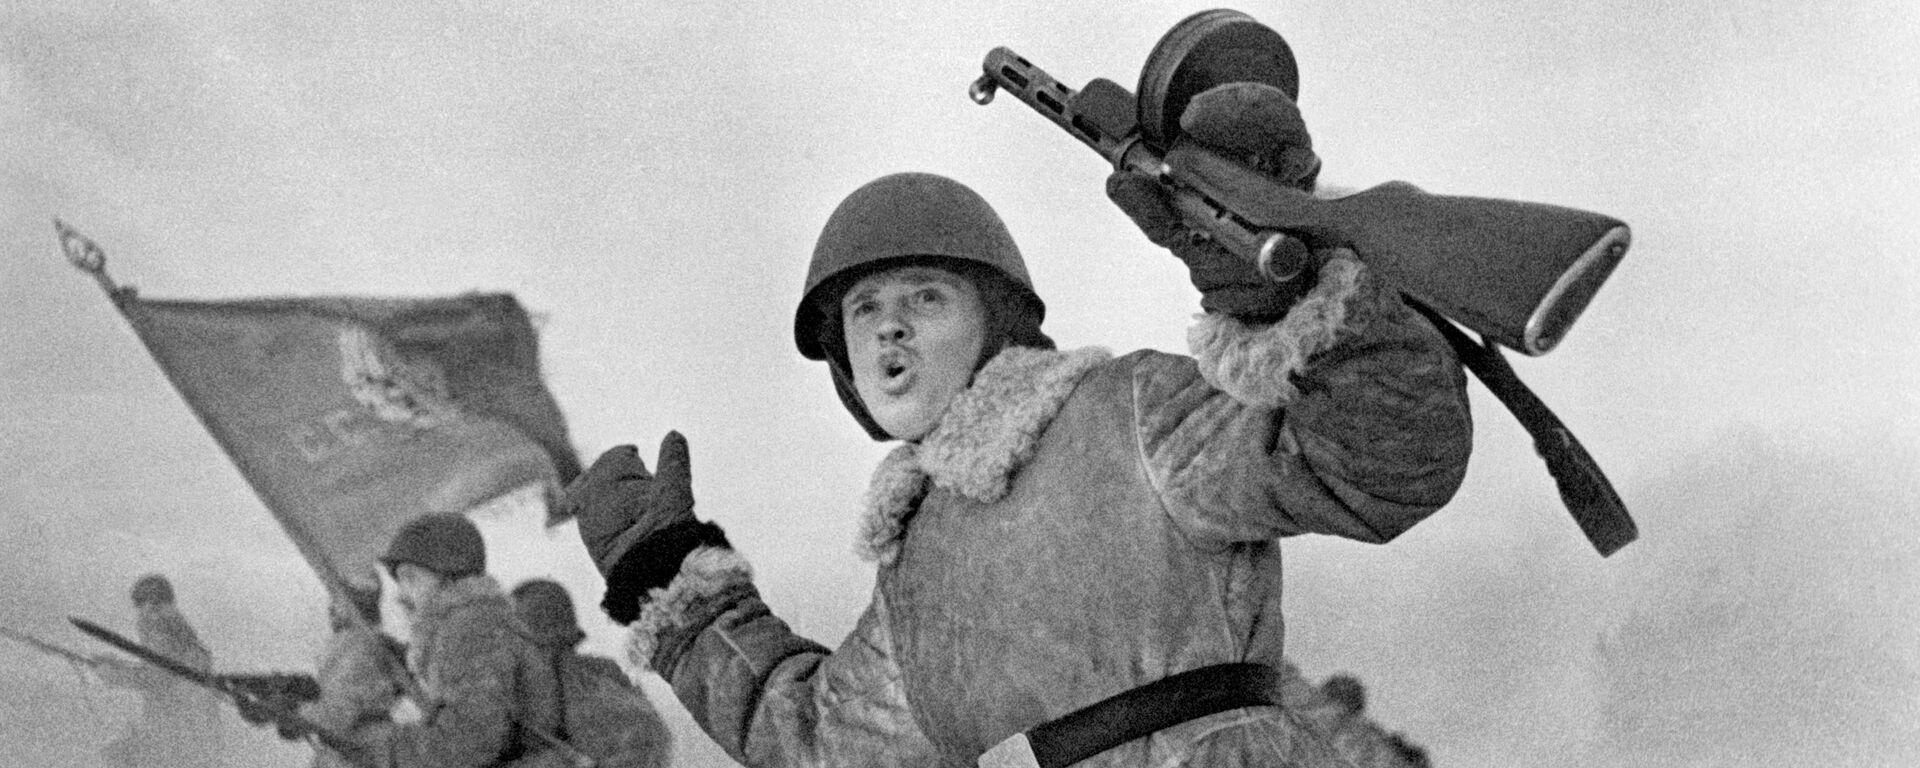 WWII Soviet soldiers near Leningrad - Sputnik International, 1920, 05.12.2018